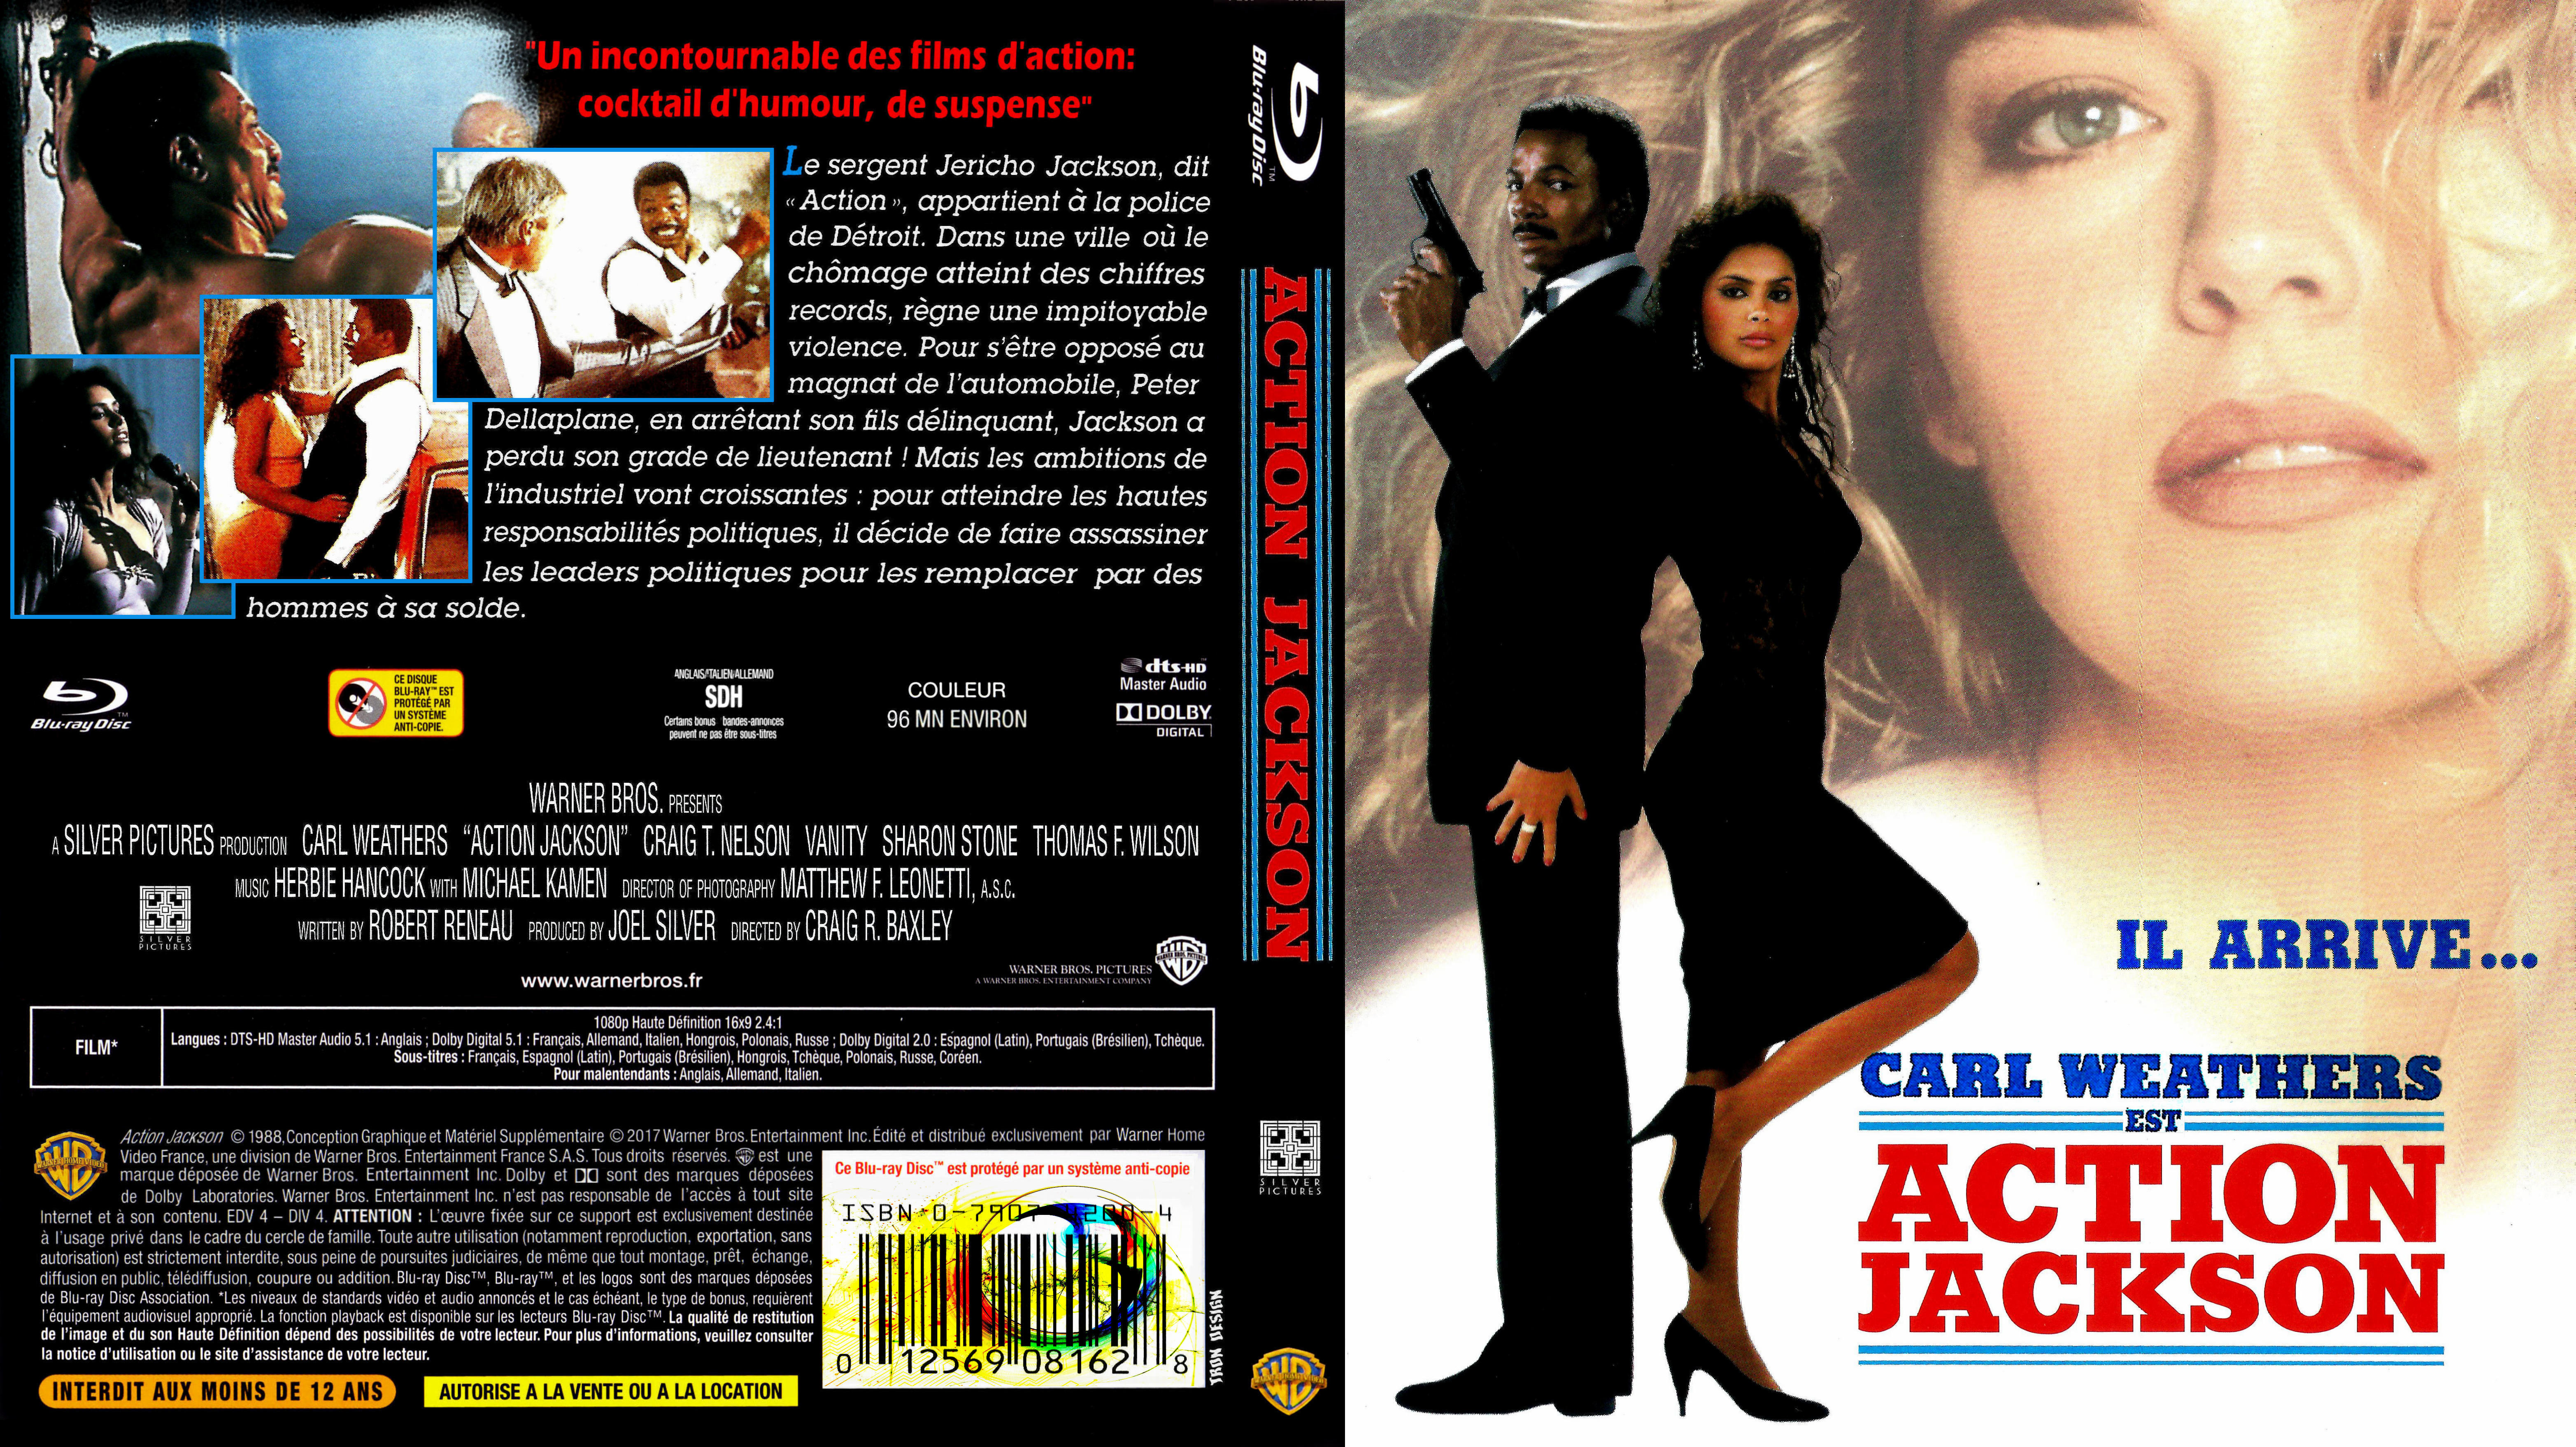 Jaquette DVD Action jackson custom (BLU-RAY)